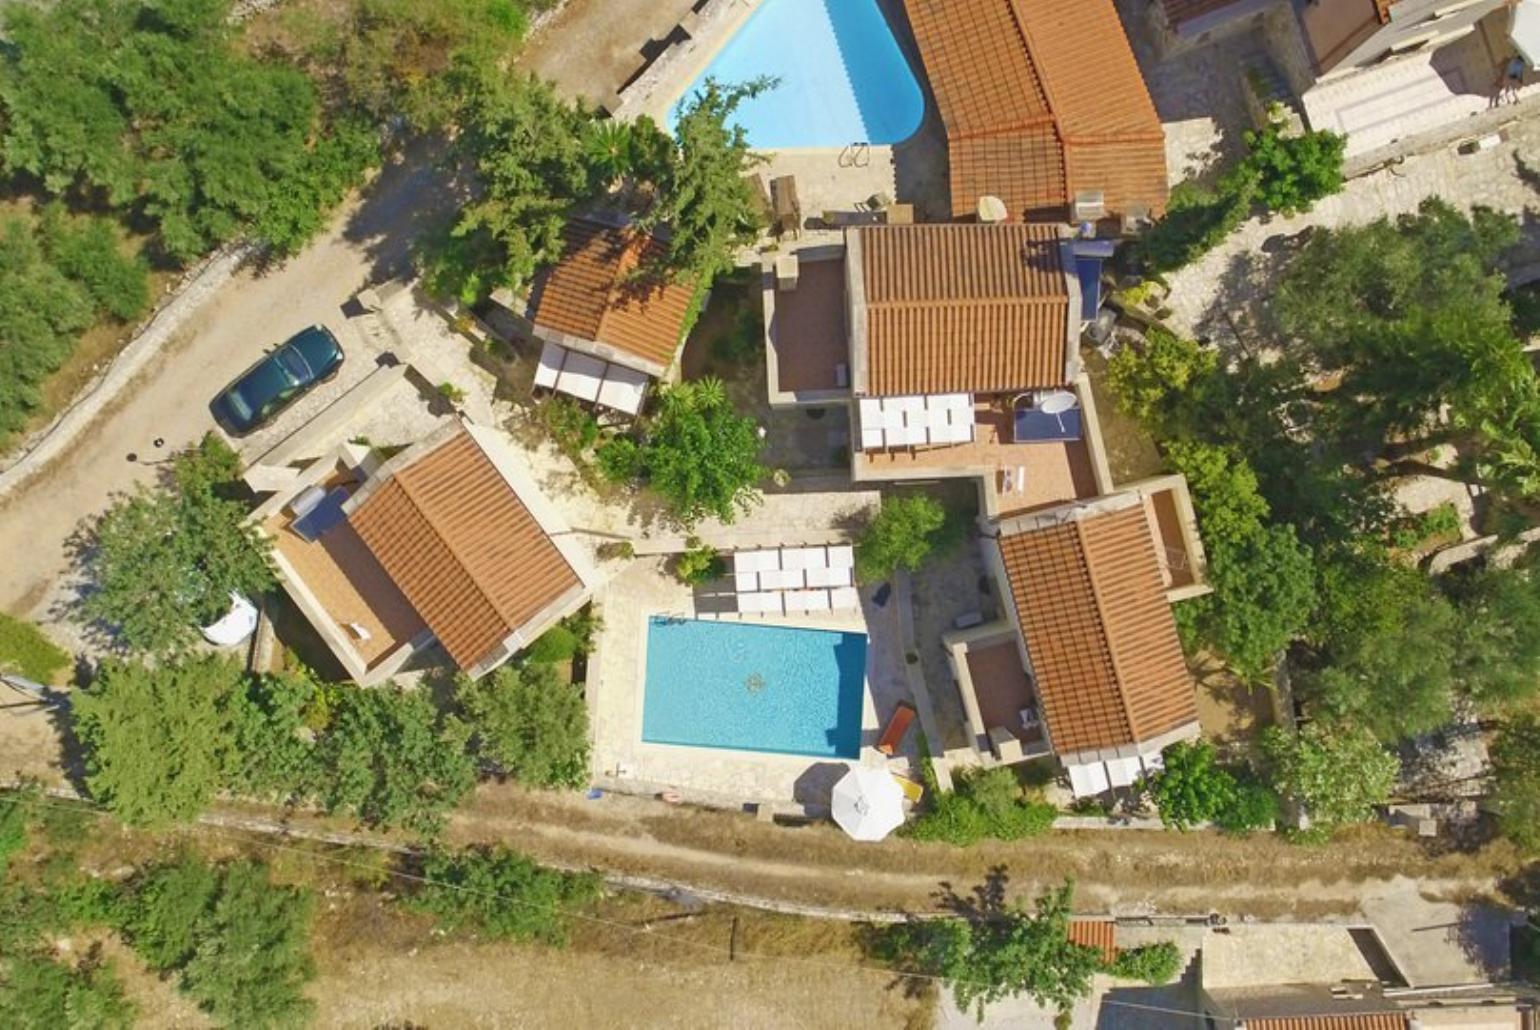 Aerial view of Villa